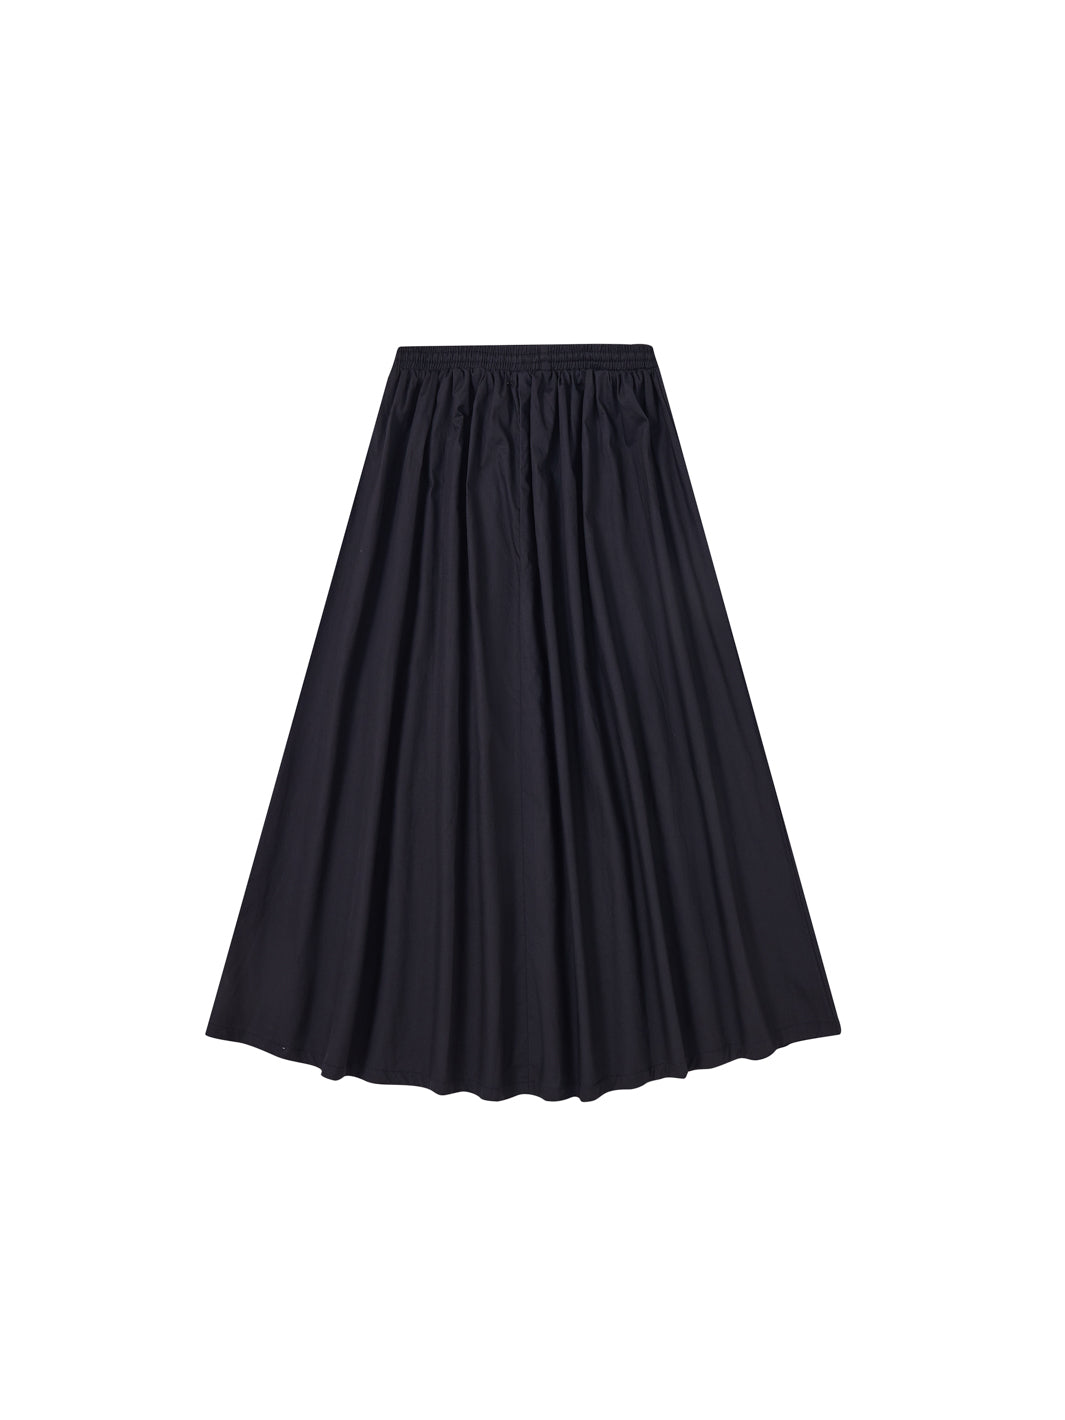 Solid Tea Length Skirt